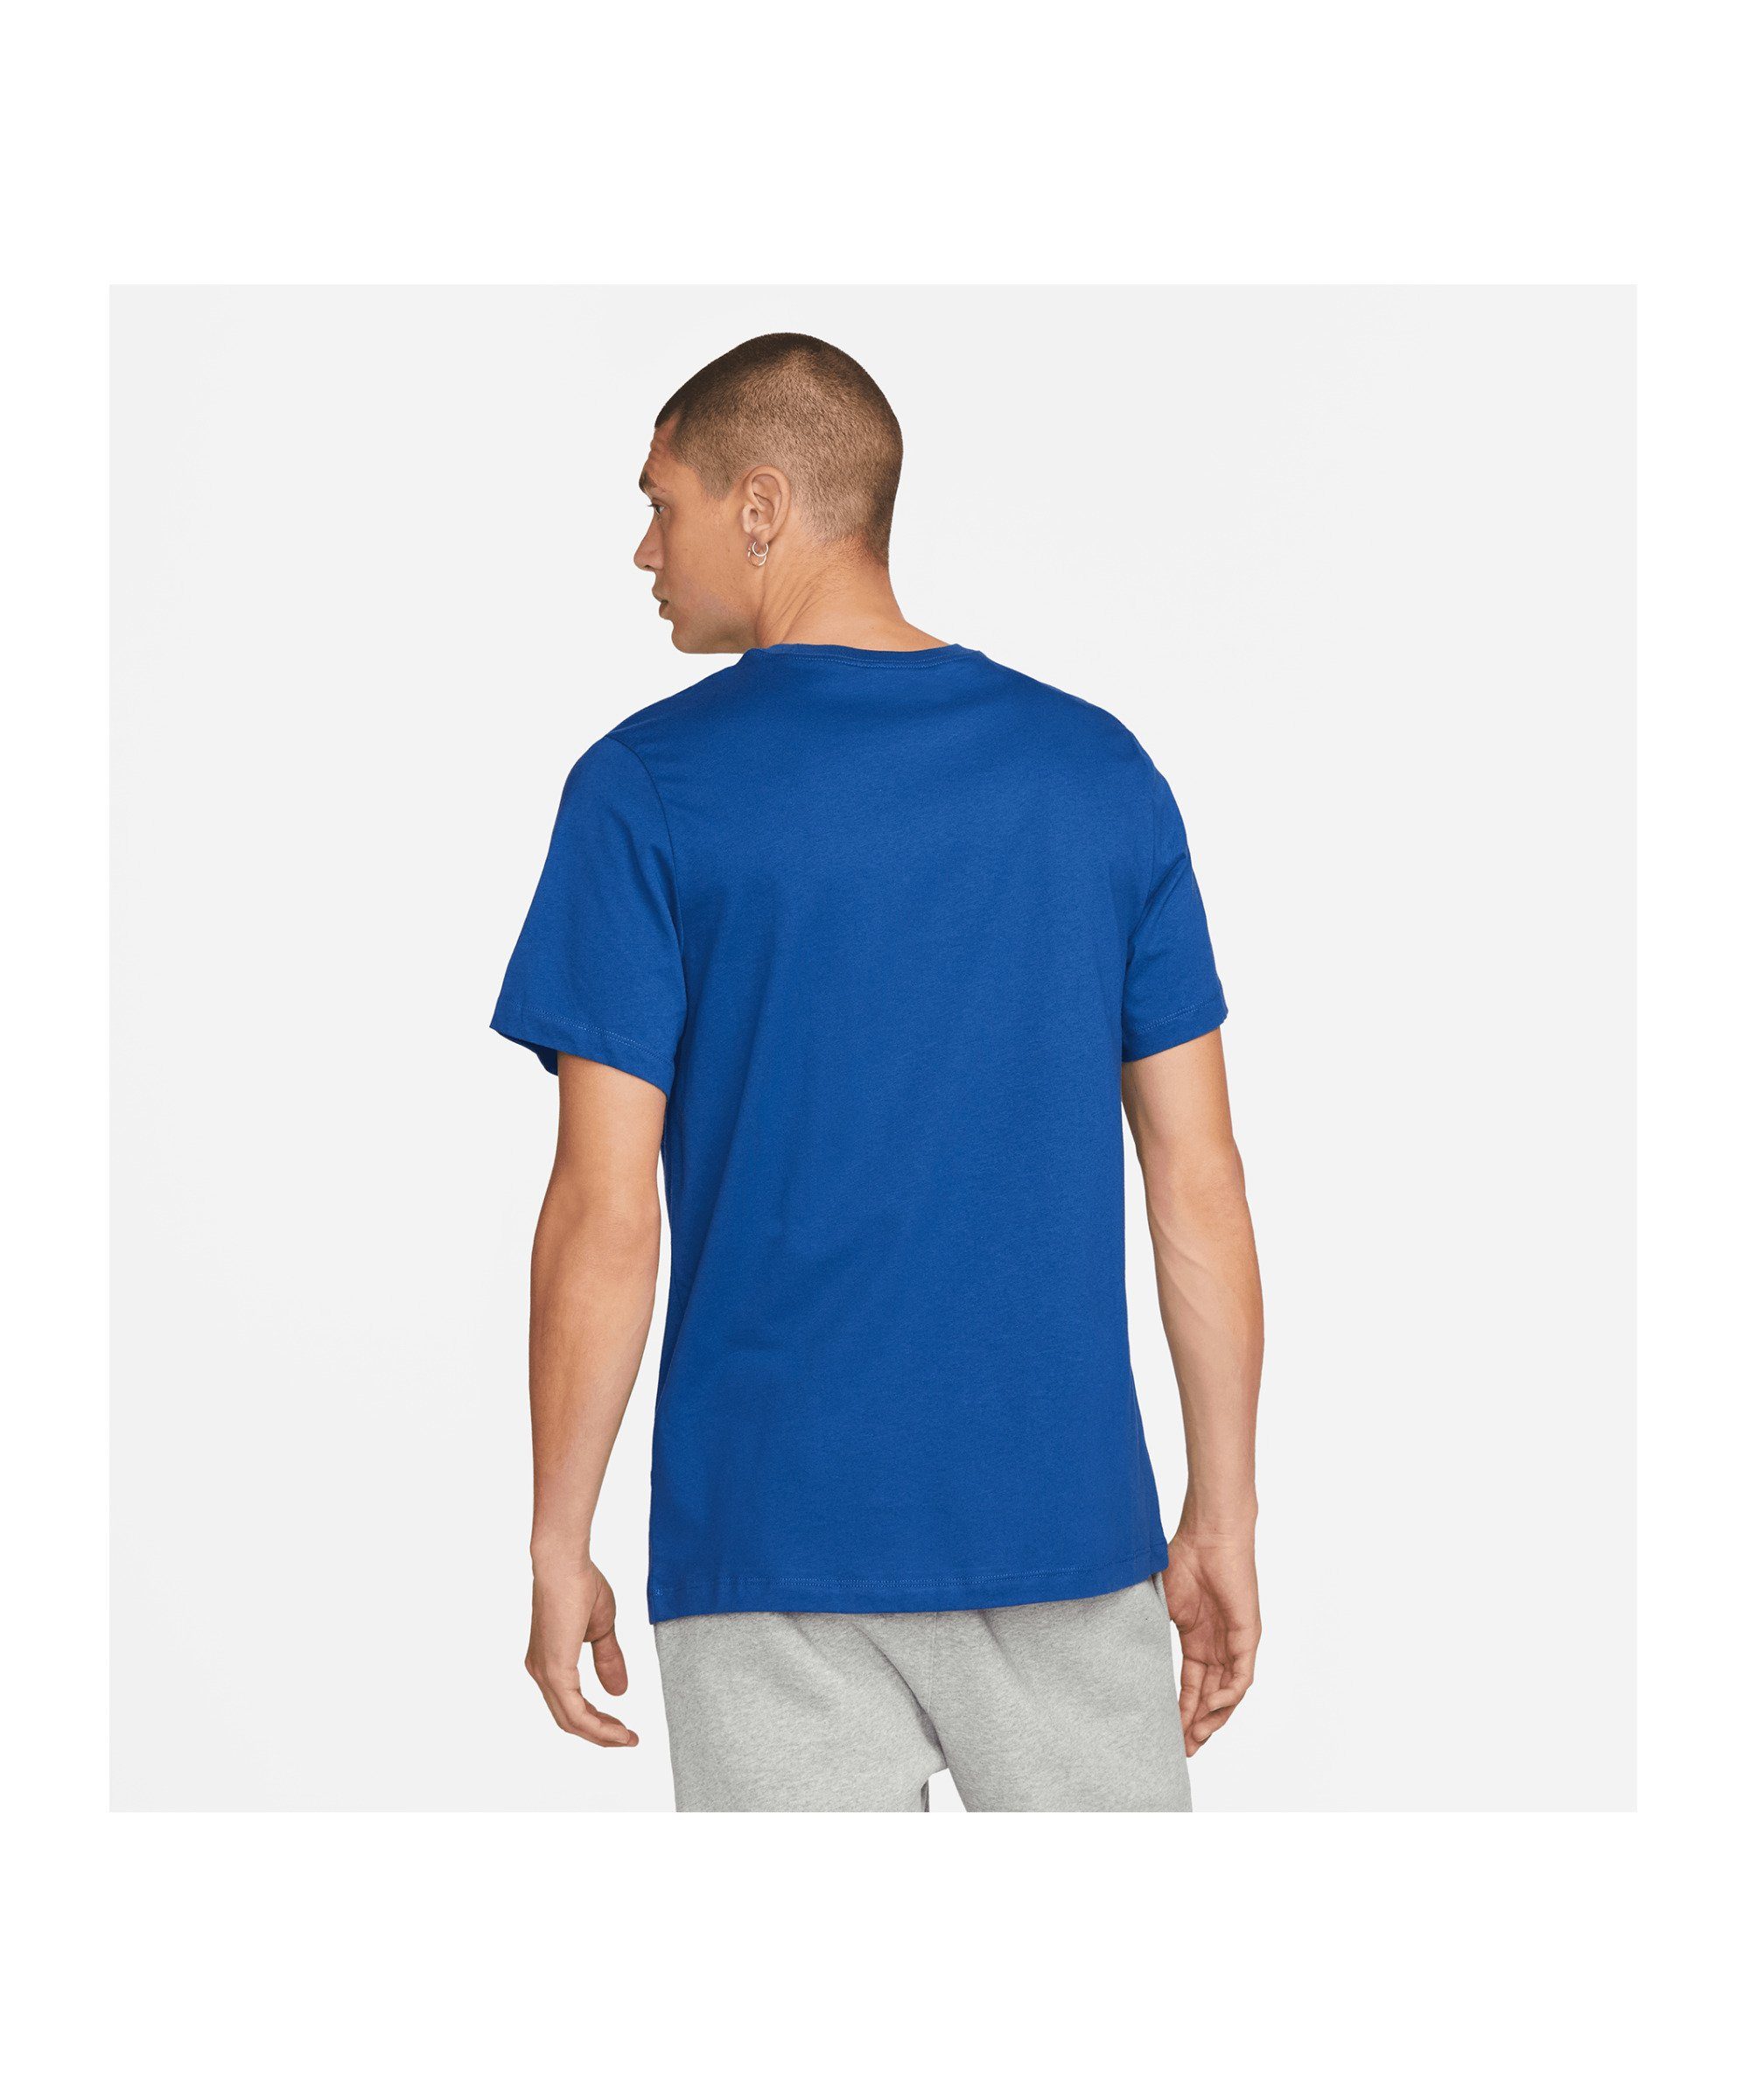 FC T-Shirt Chelsea default Nike London T-Shirt